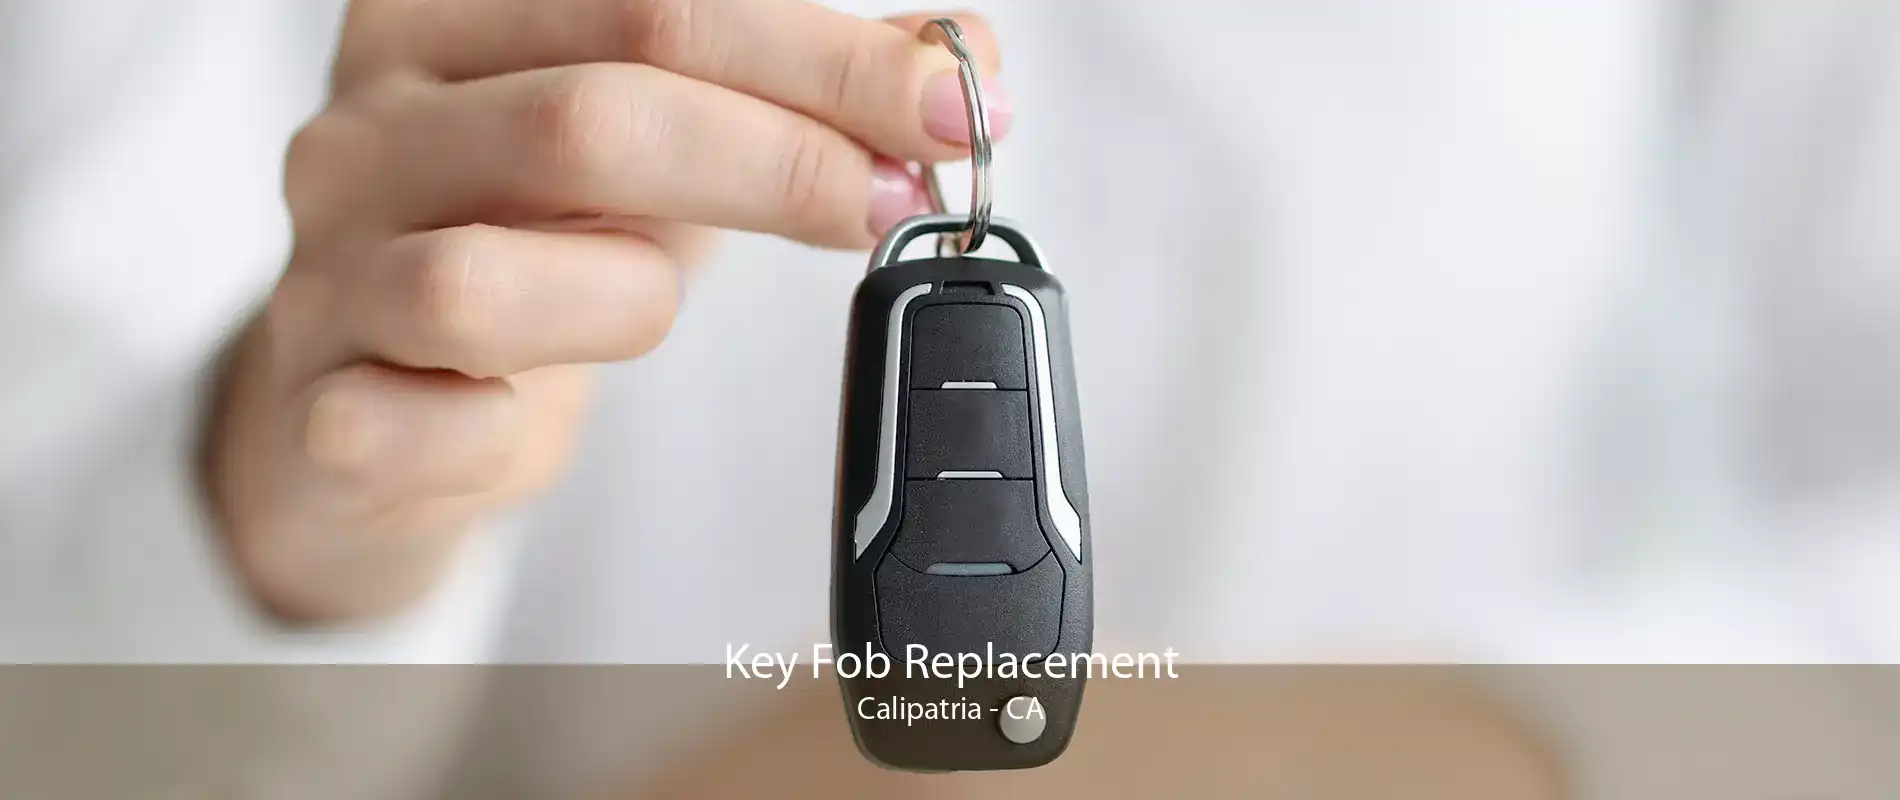 Key Fob Replacement Calipatria - CA